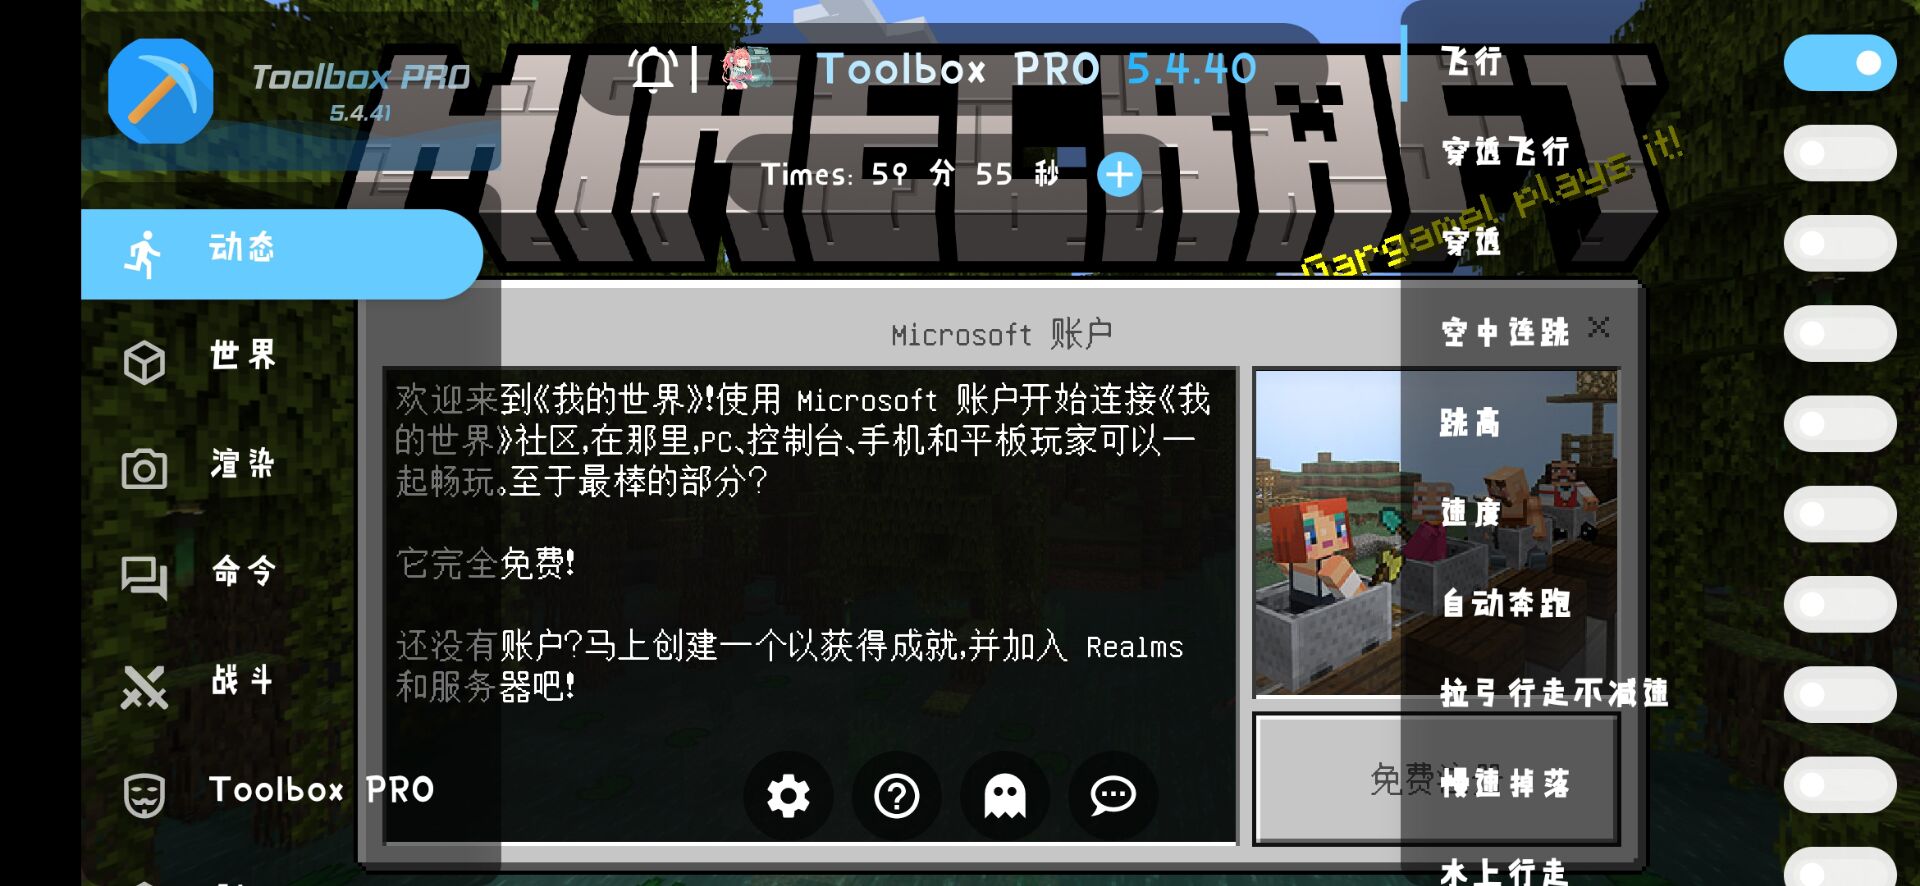 Toolbox PRO-网罗四方